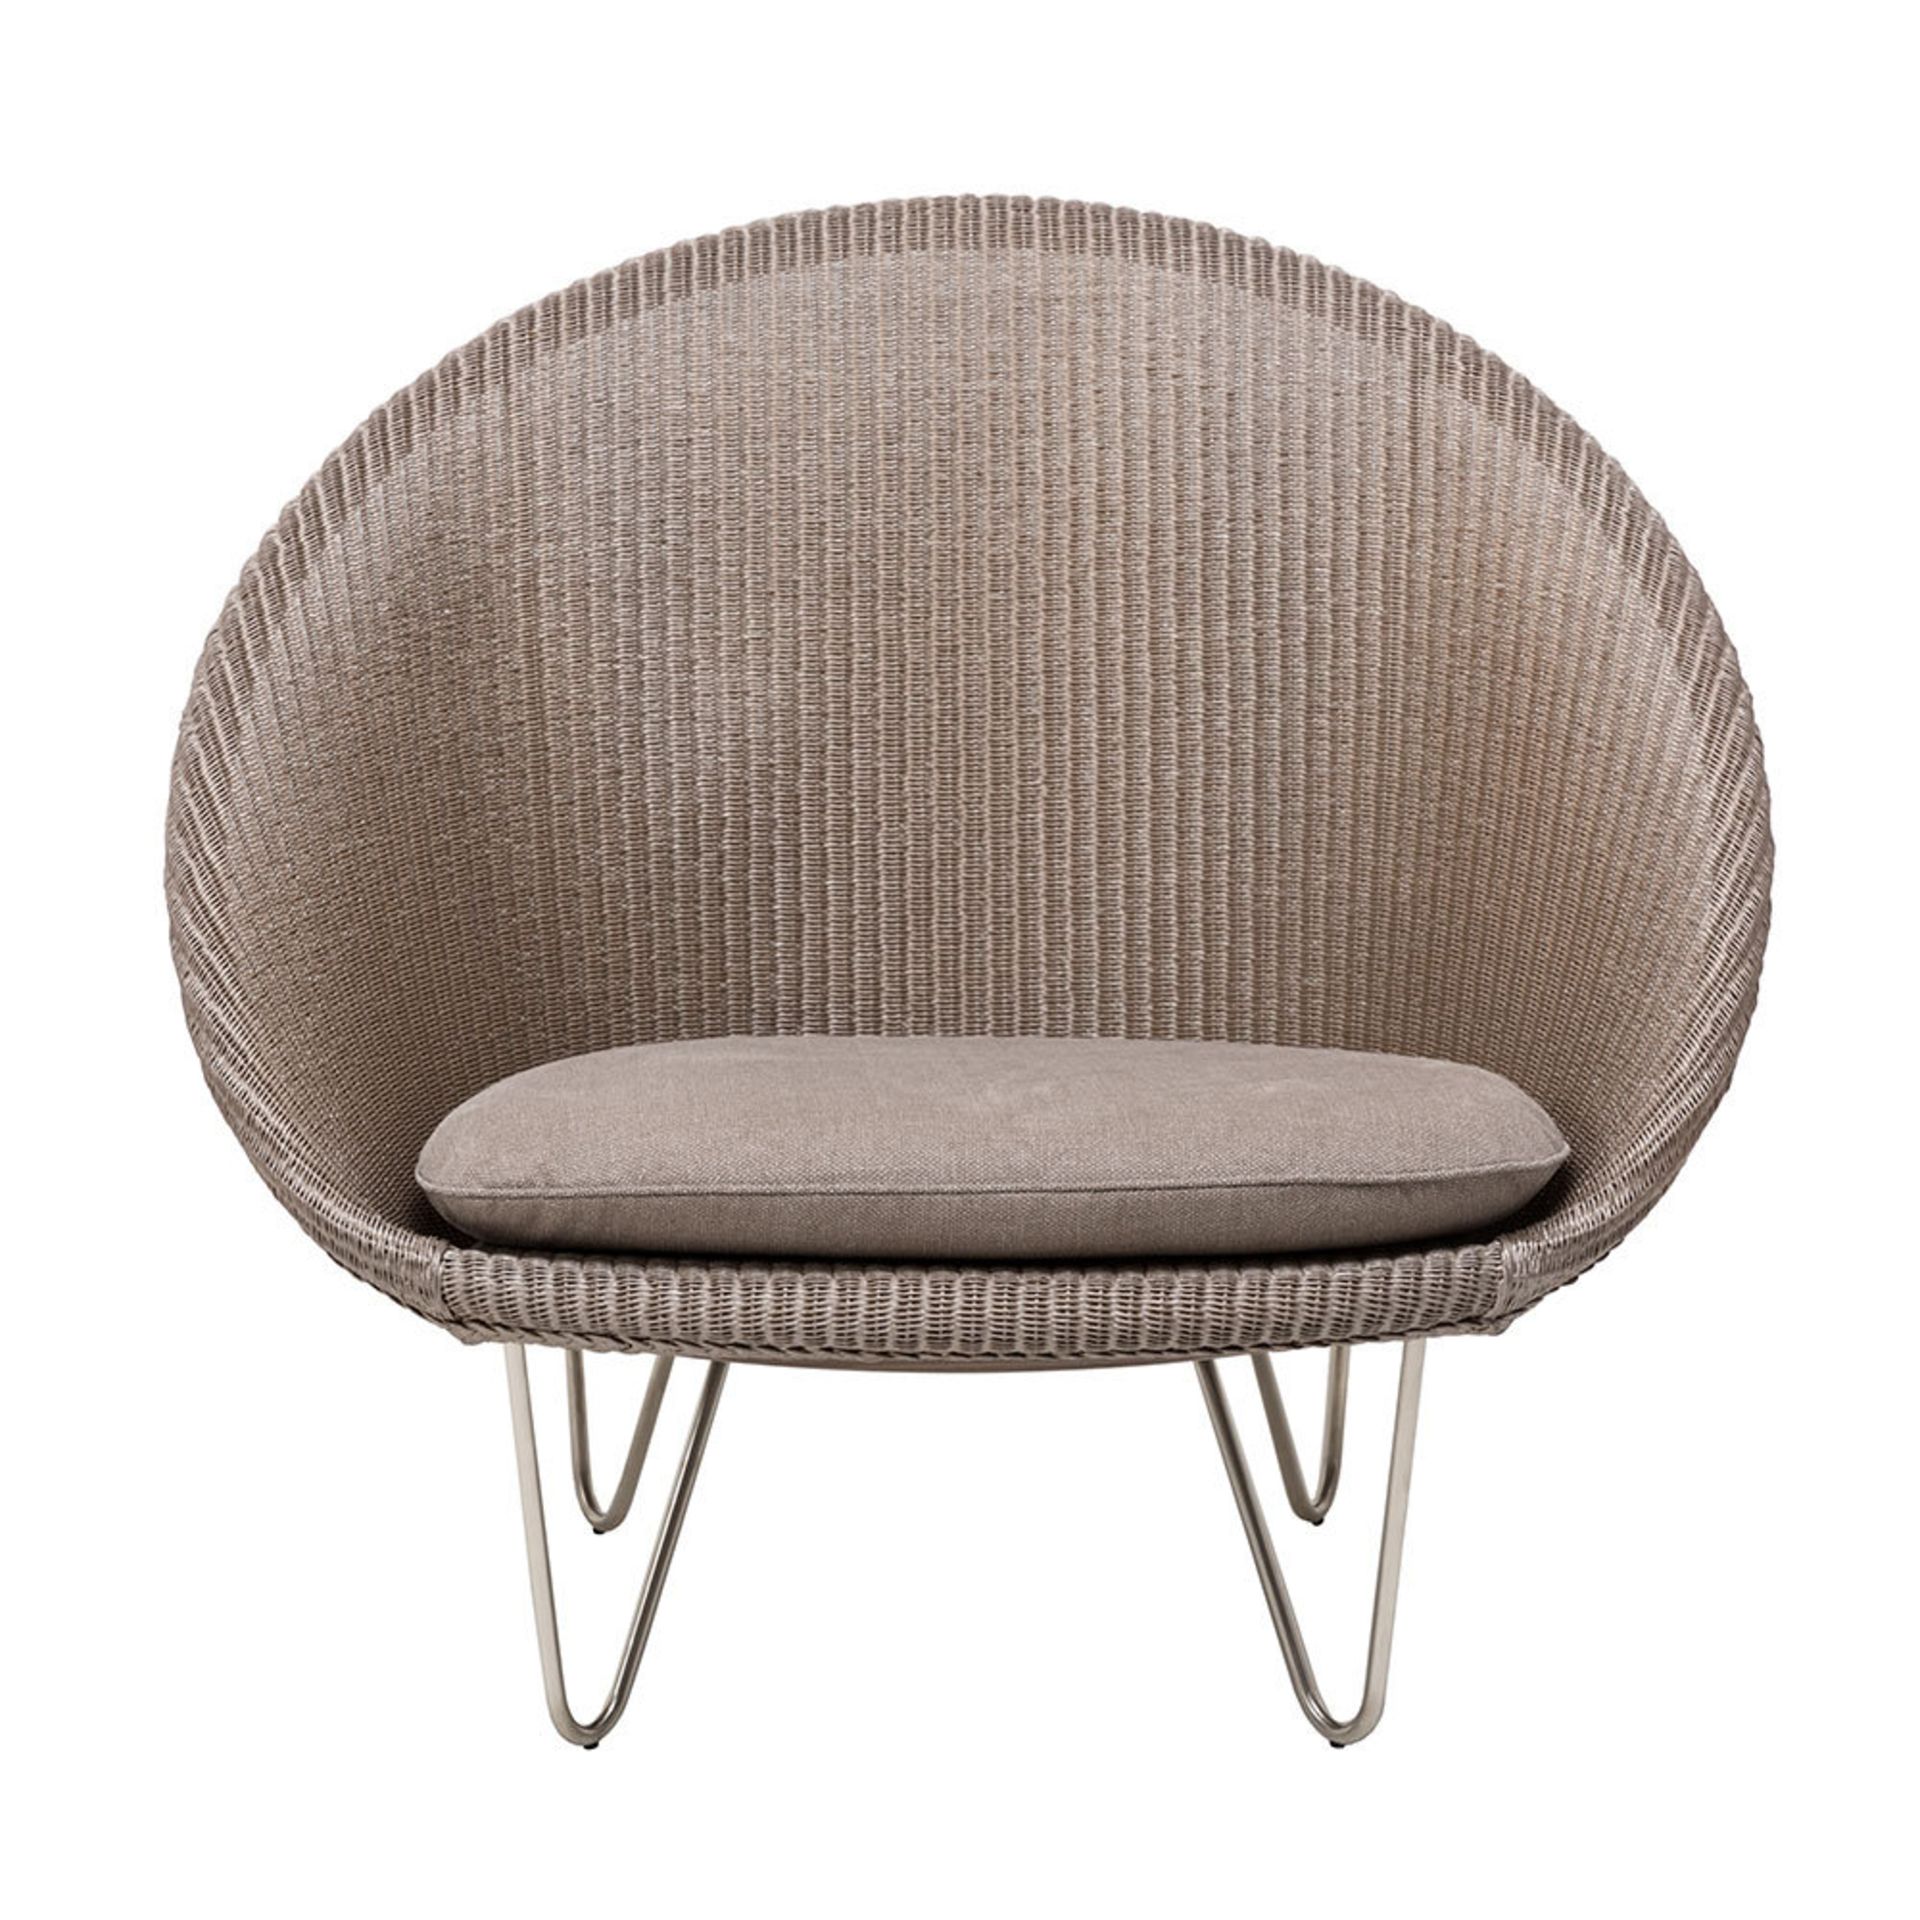 1 x Joe Cocoon Tub Chair by Vincent Shepherd - Nacre Lloyd Loom With Geneva Seat Cushion - RRP £668! - Image 2 of 5